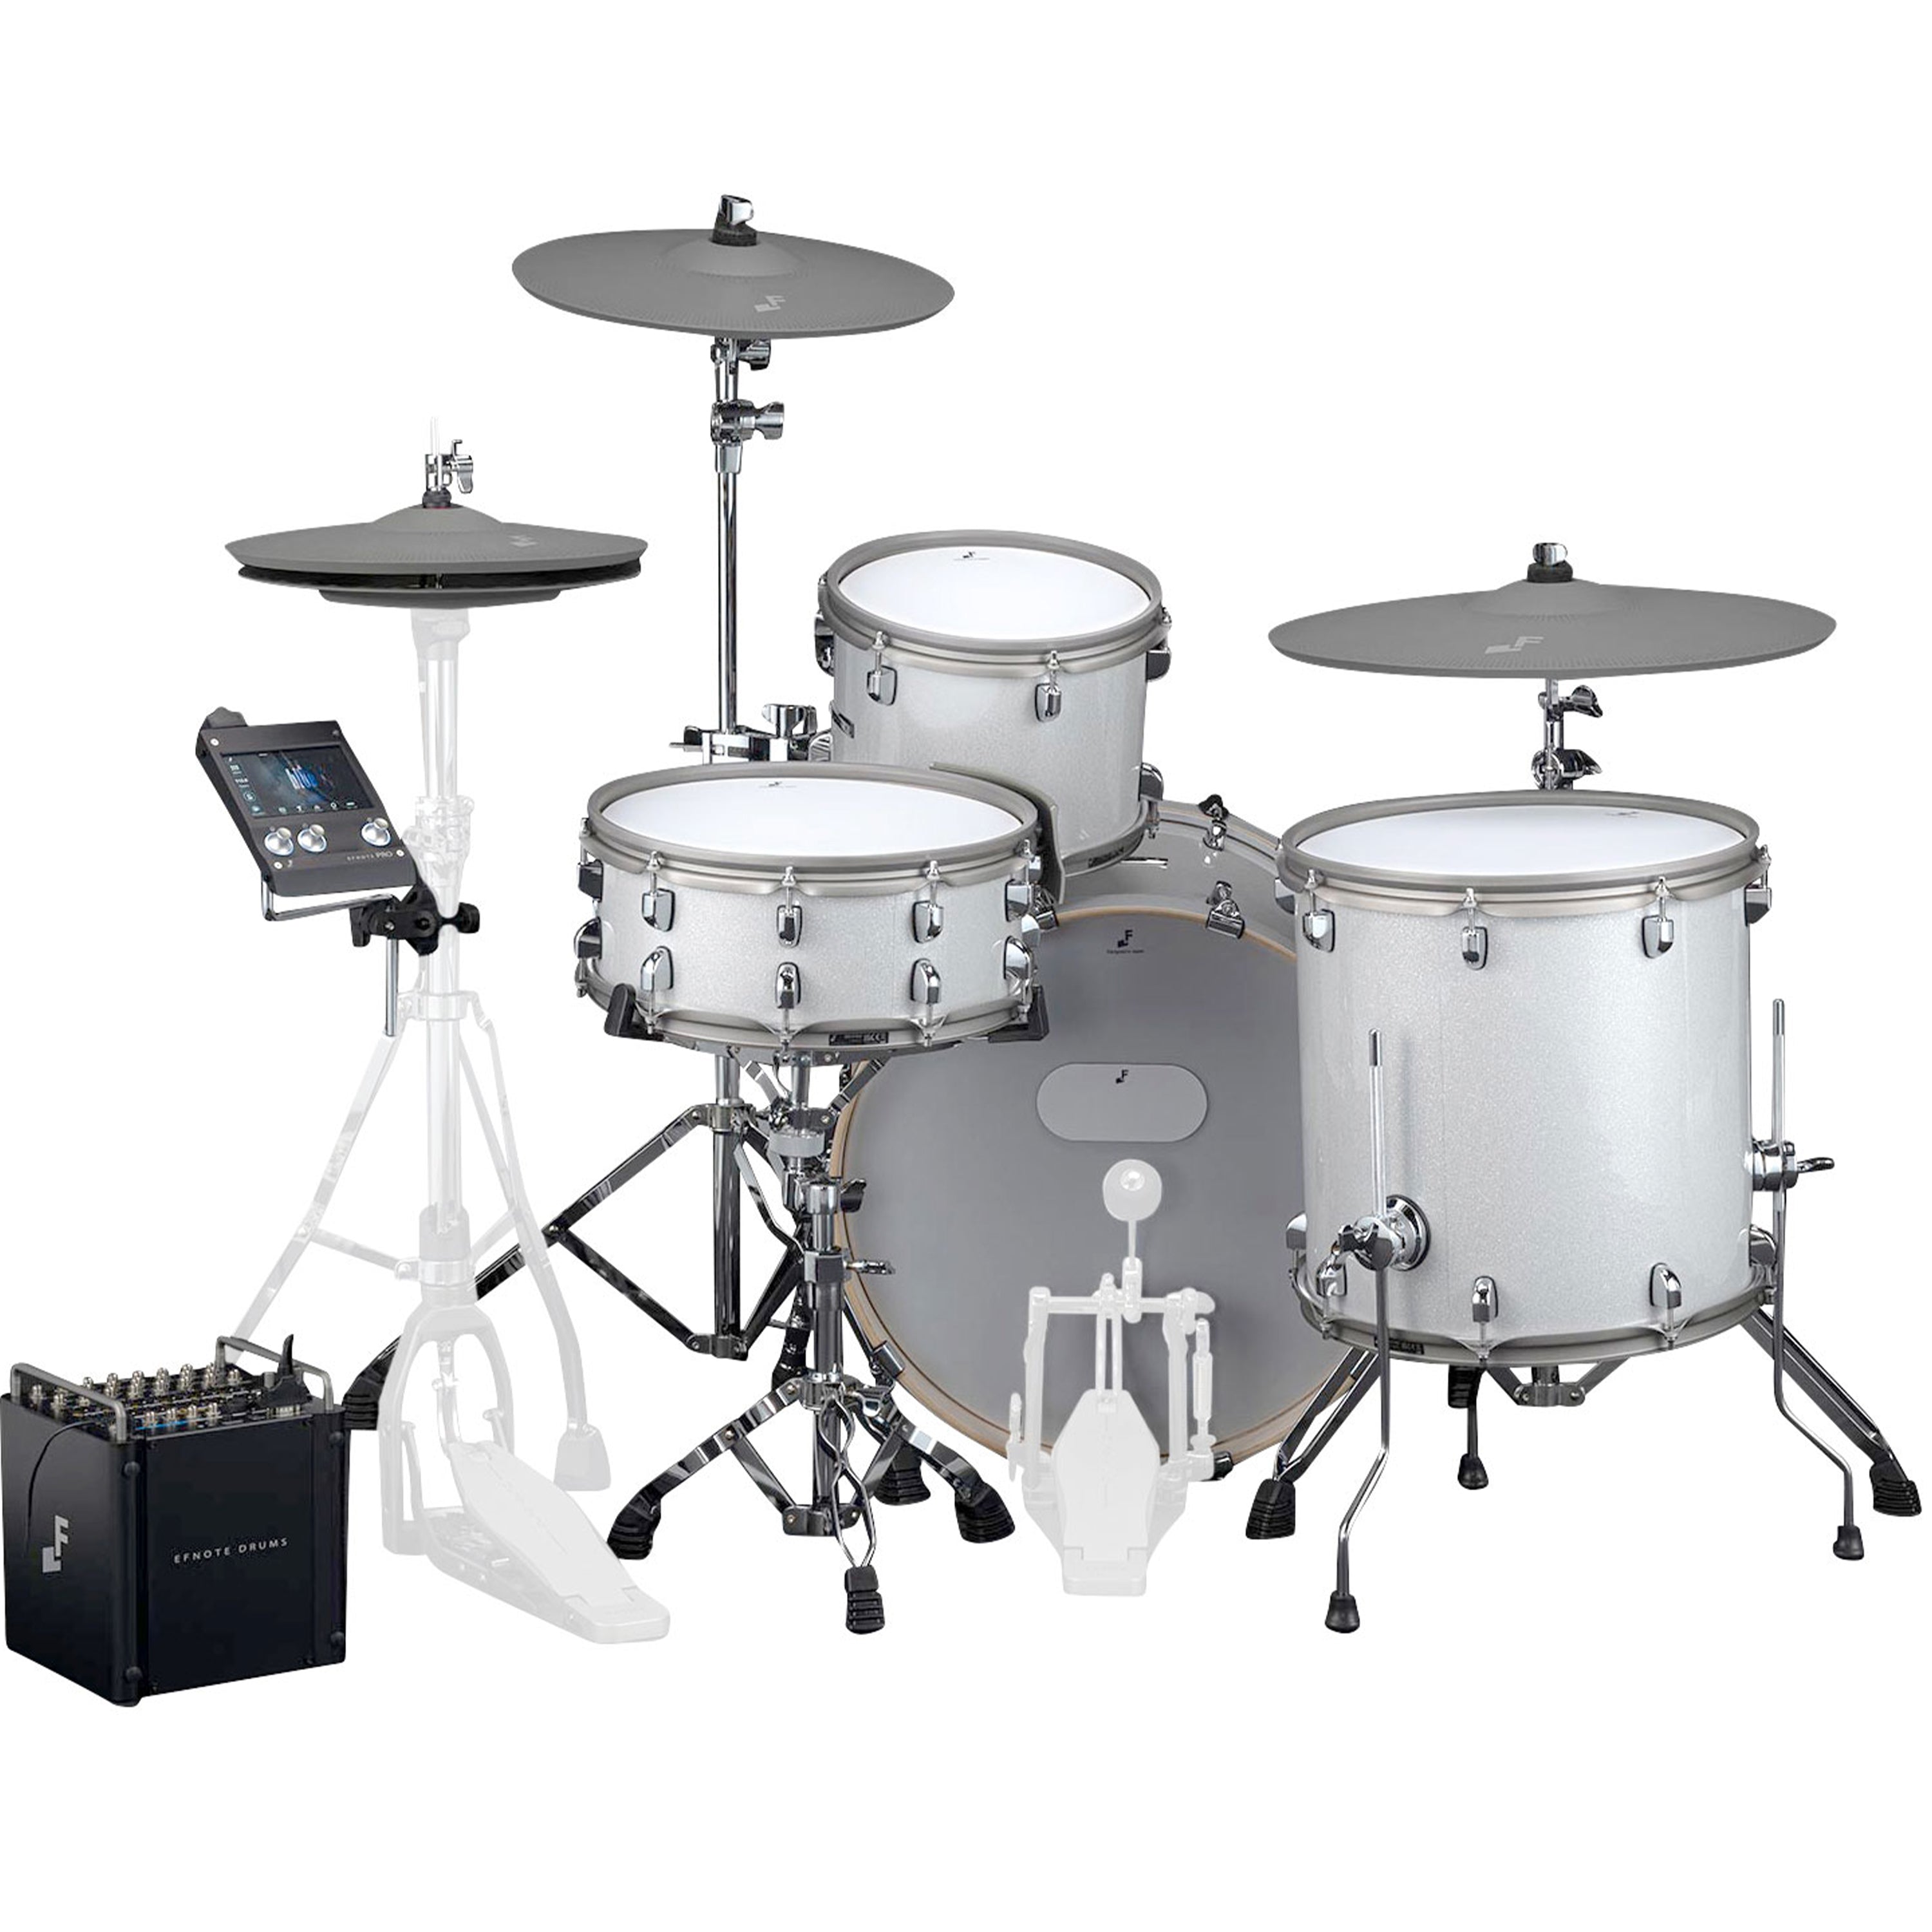 EFNOTE PRO 700 Standard Electronic Drum Kit - drummer view